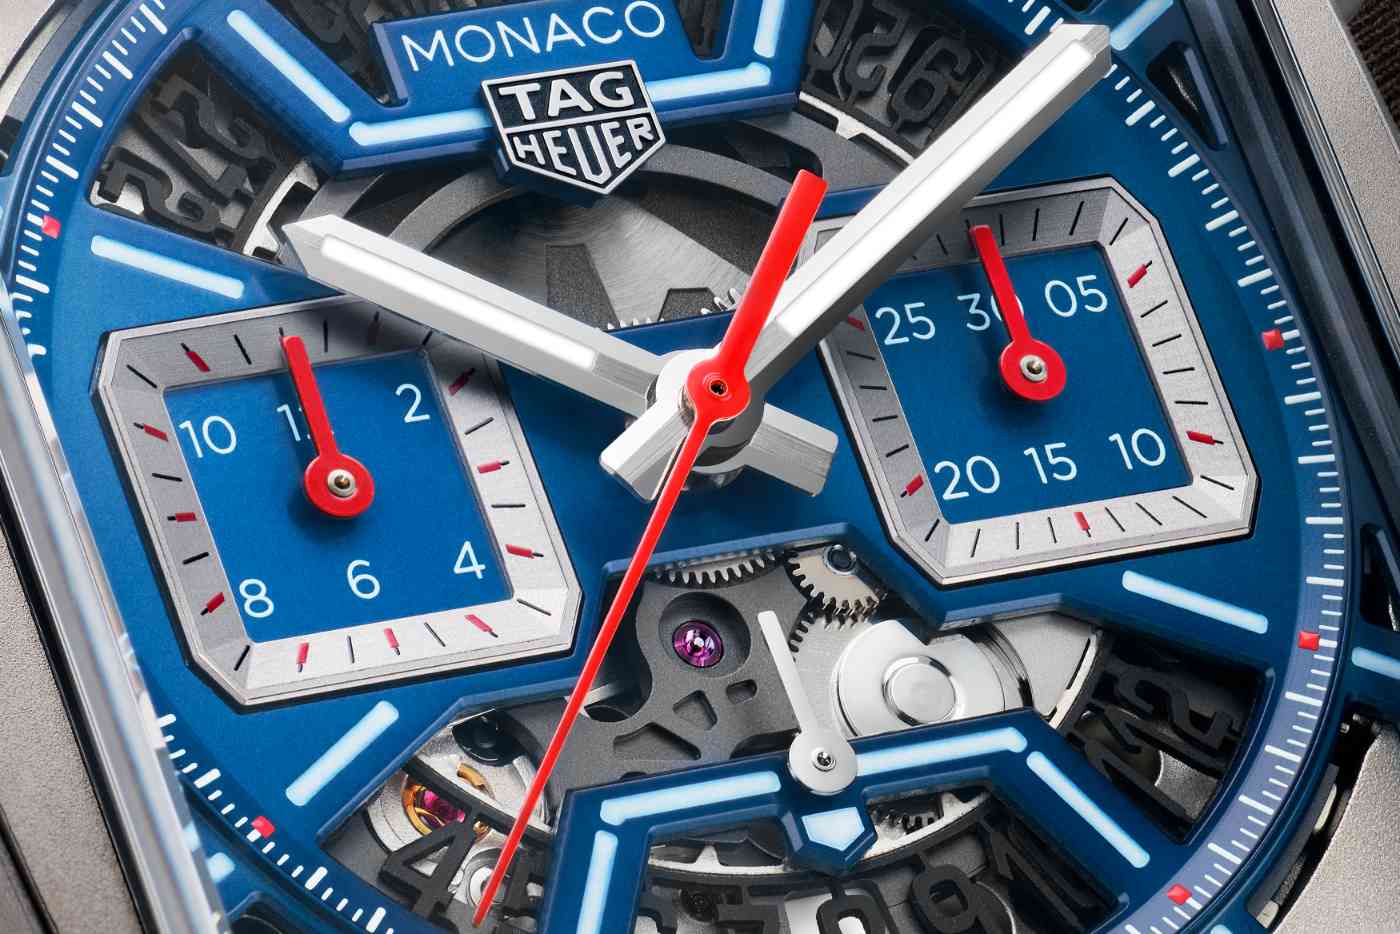 TAG Heuer Monaco Chronographs